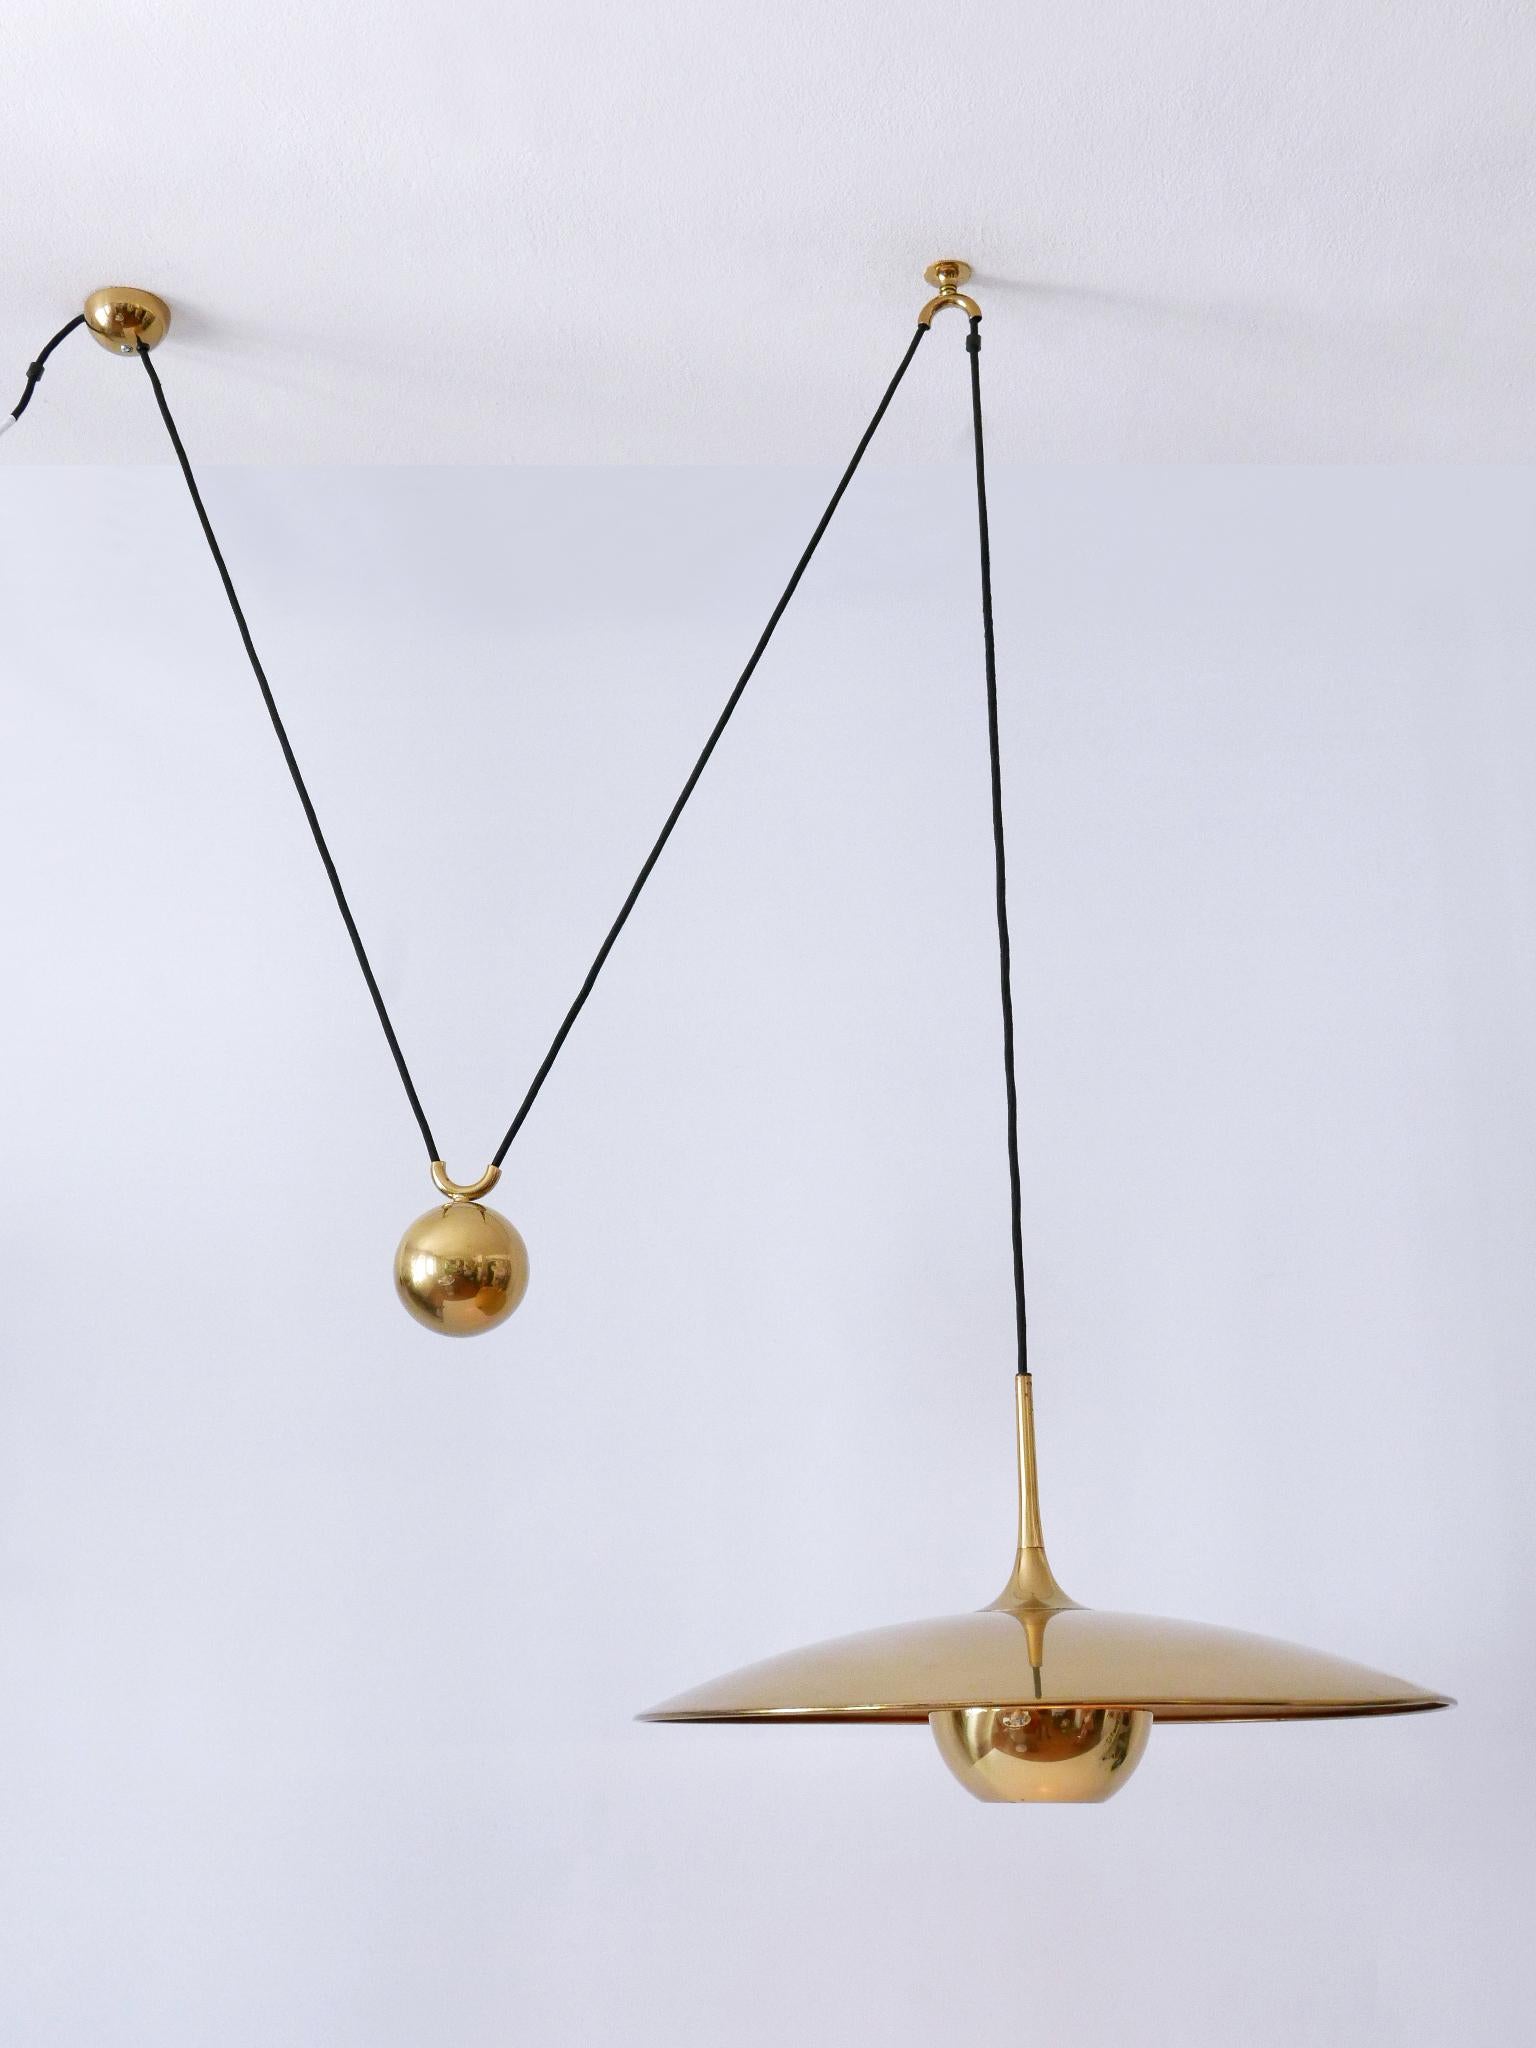 Elegant Mid-Century Modern brass counterweight pendant lamp or hanging light. Model 